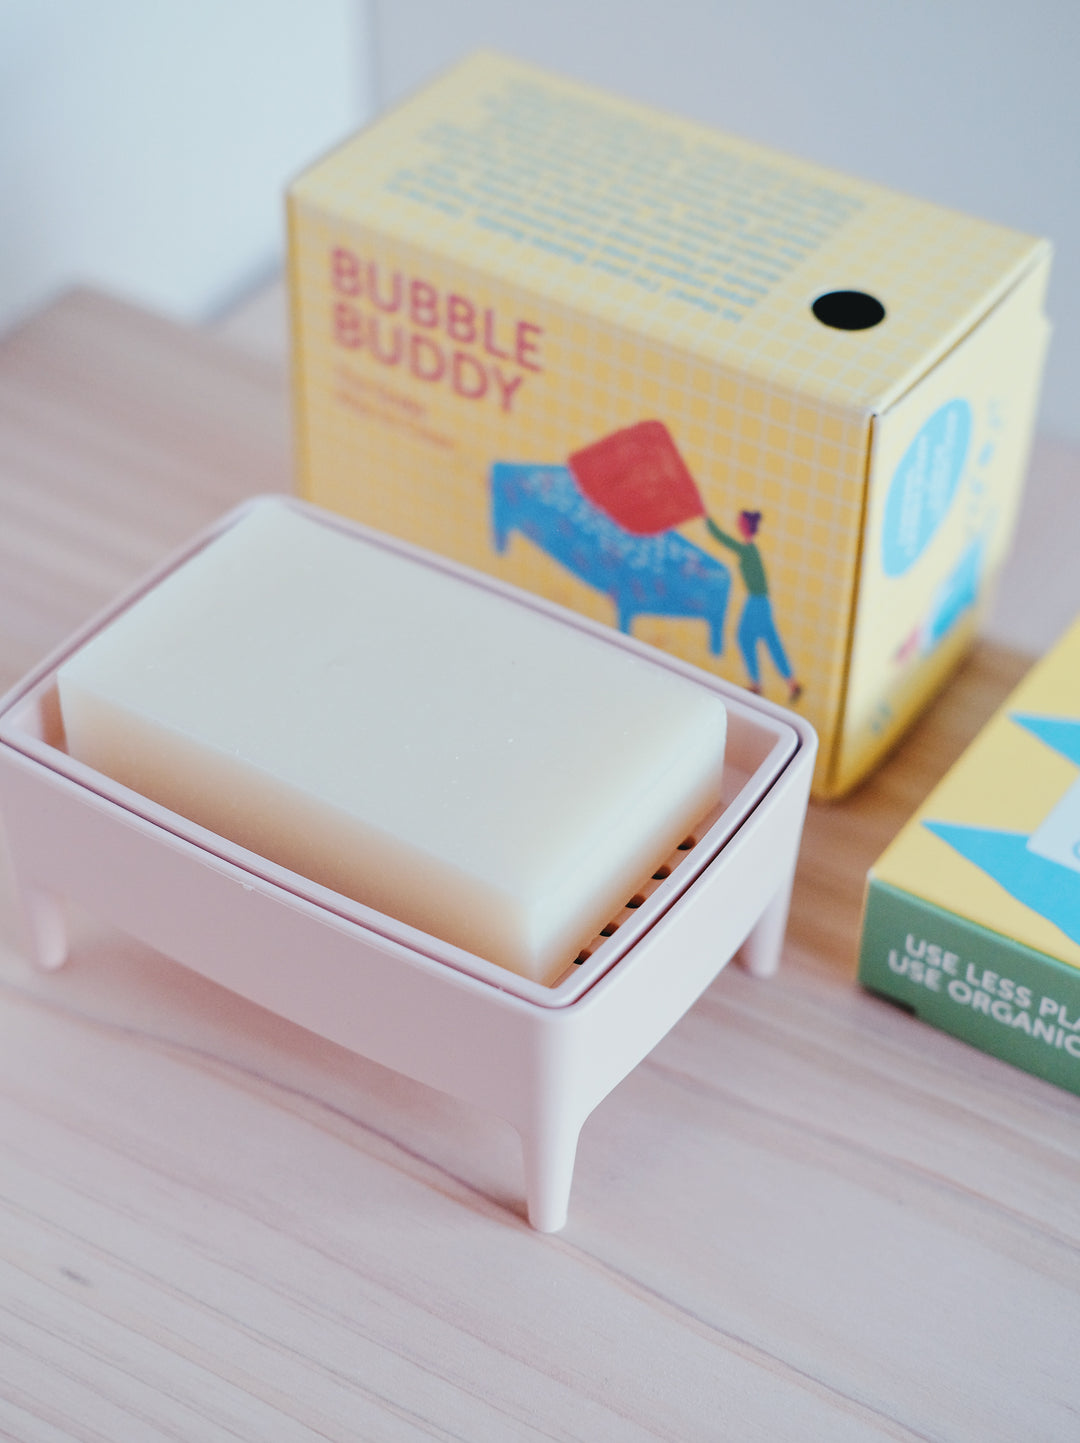 Bubble Buddy Kit with Lemon Soap Bar